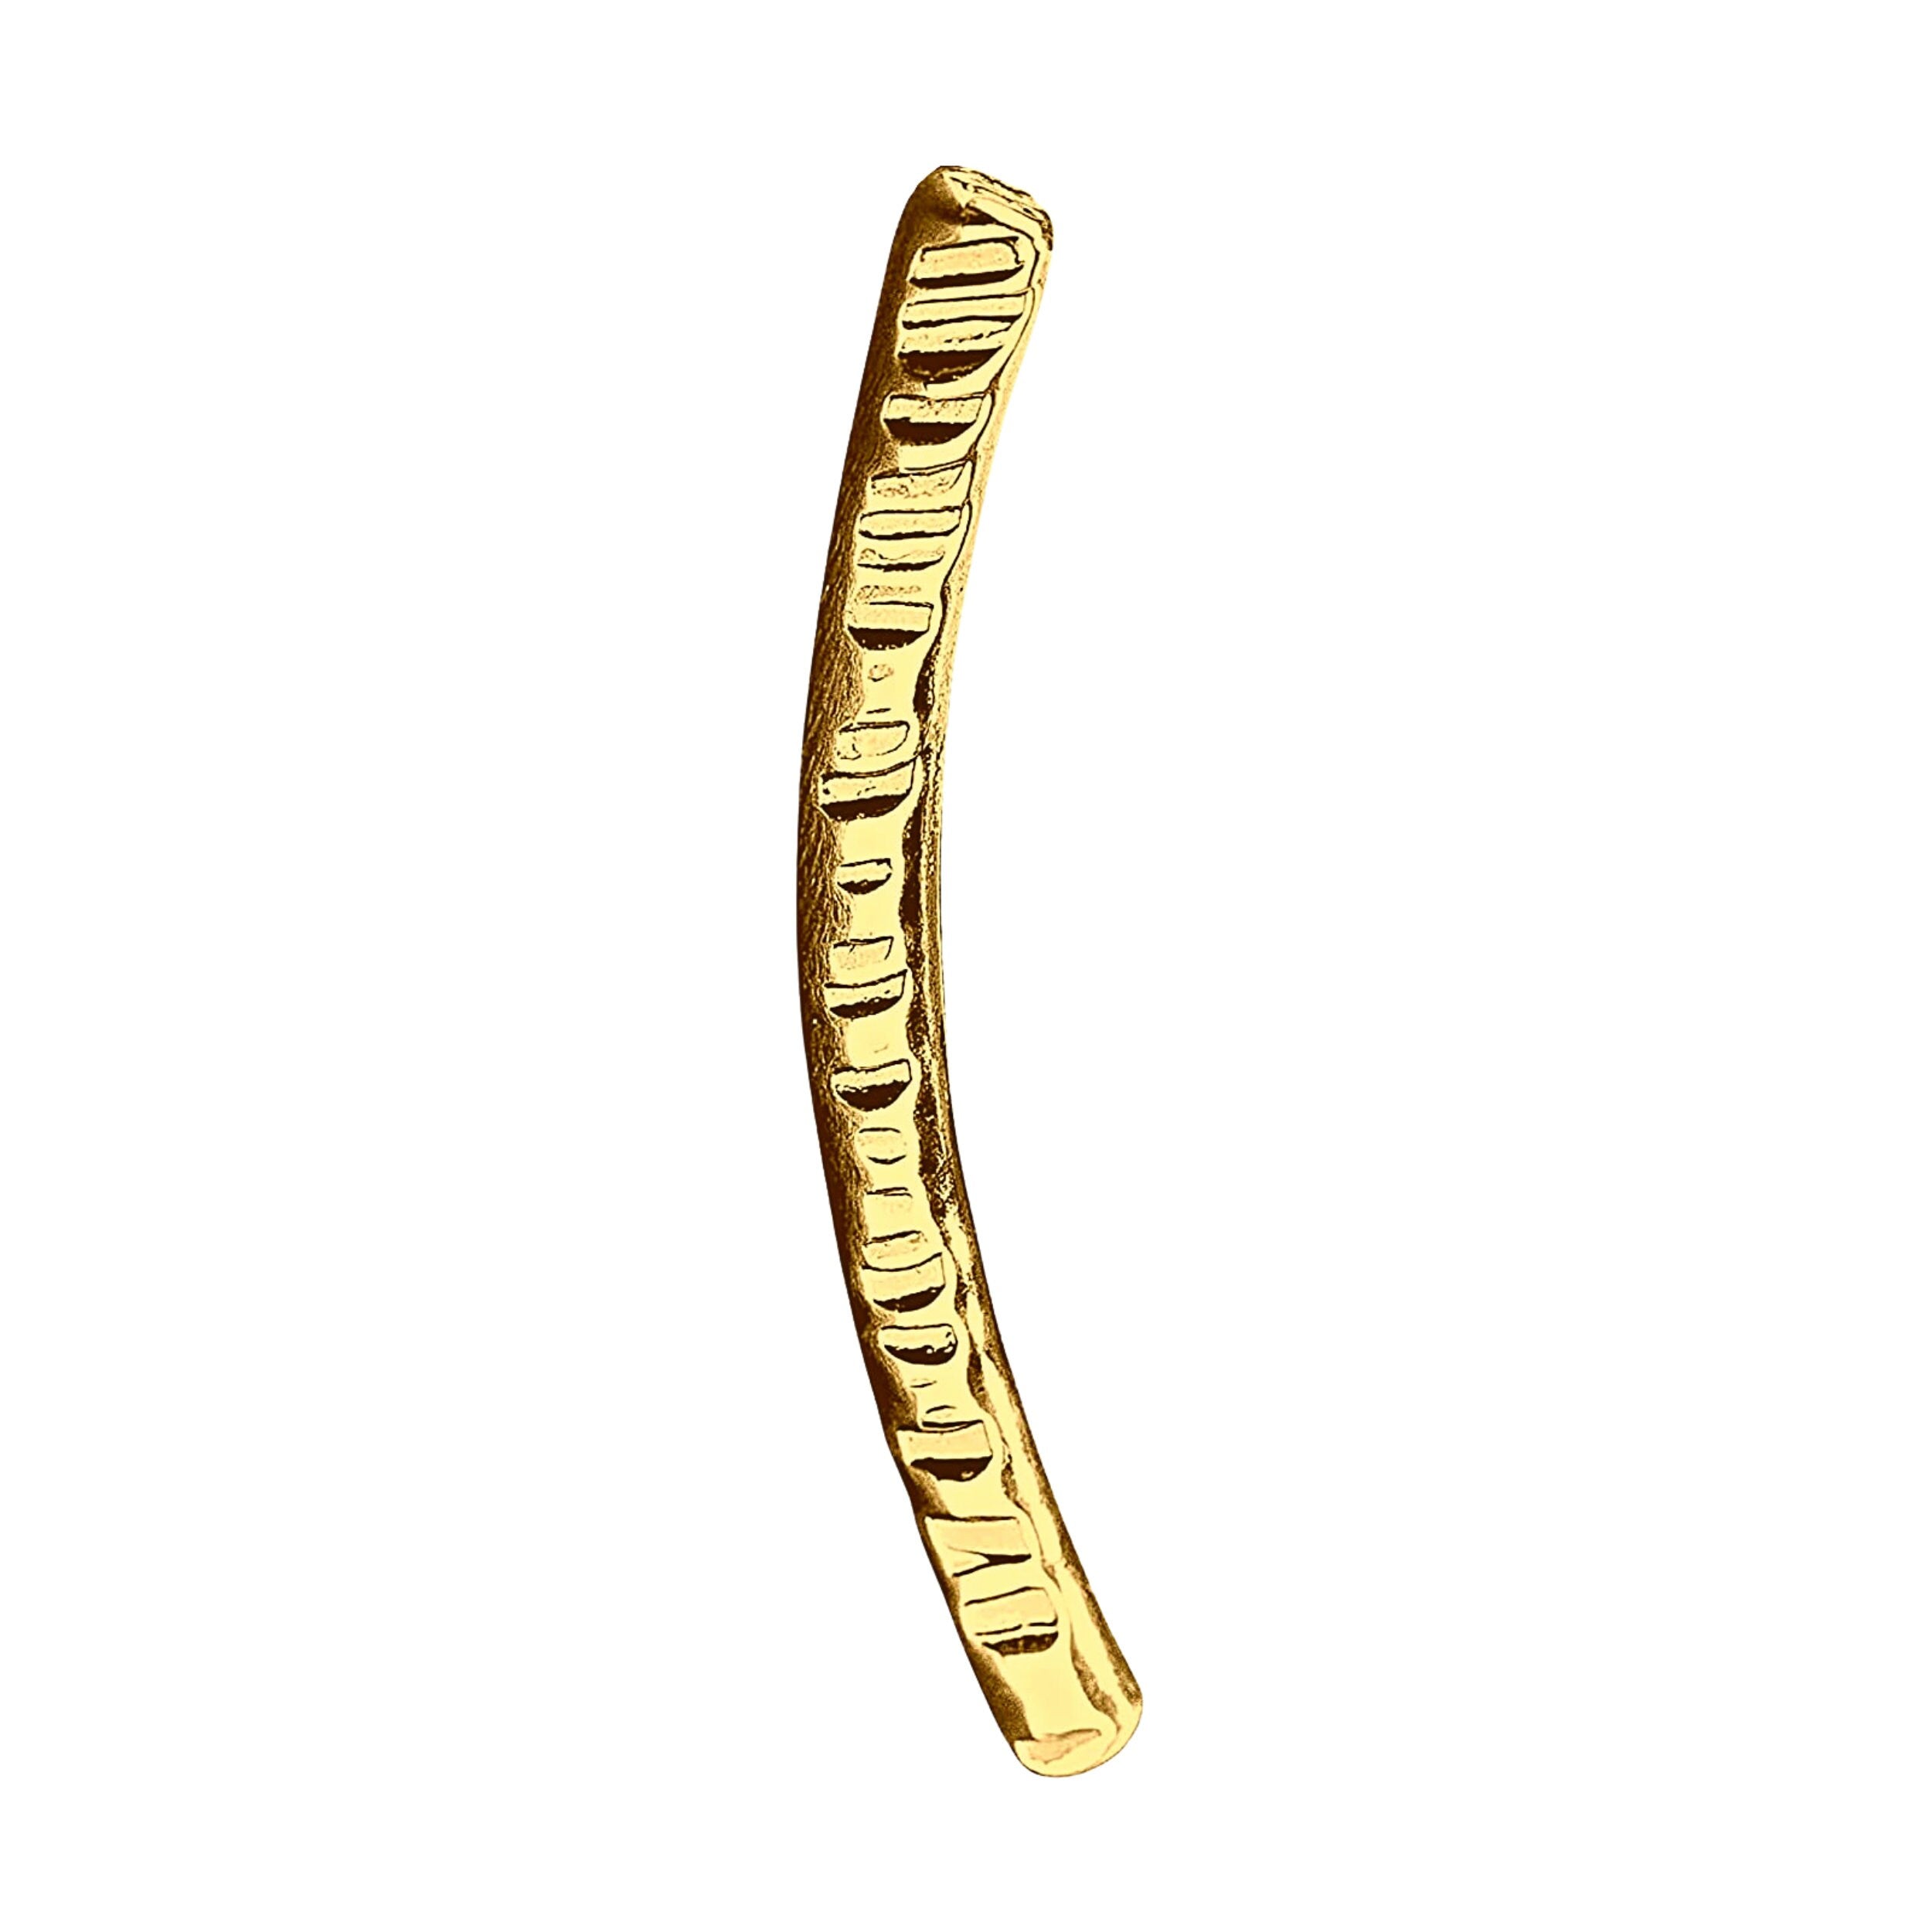 Rugged Cartilage Bar Earring | 14K Gold Fill - Melanie Golden Jewelry - cartilage earrings, earrings, piercings